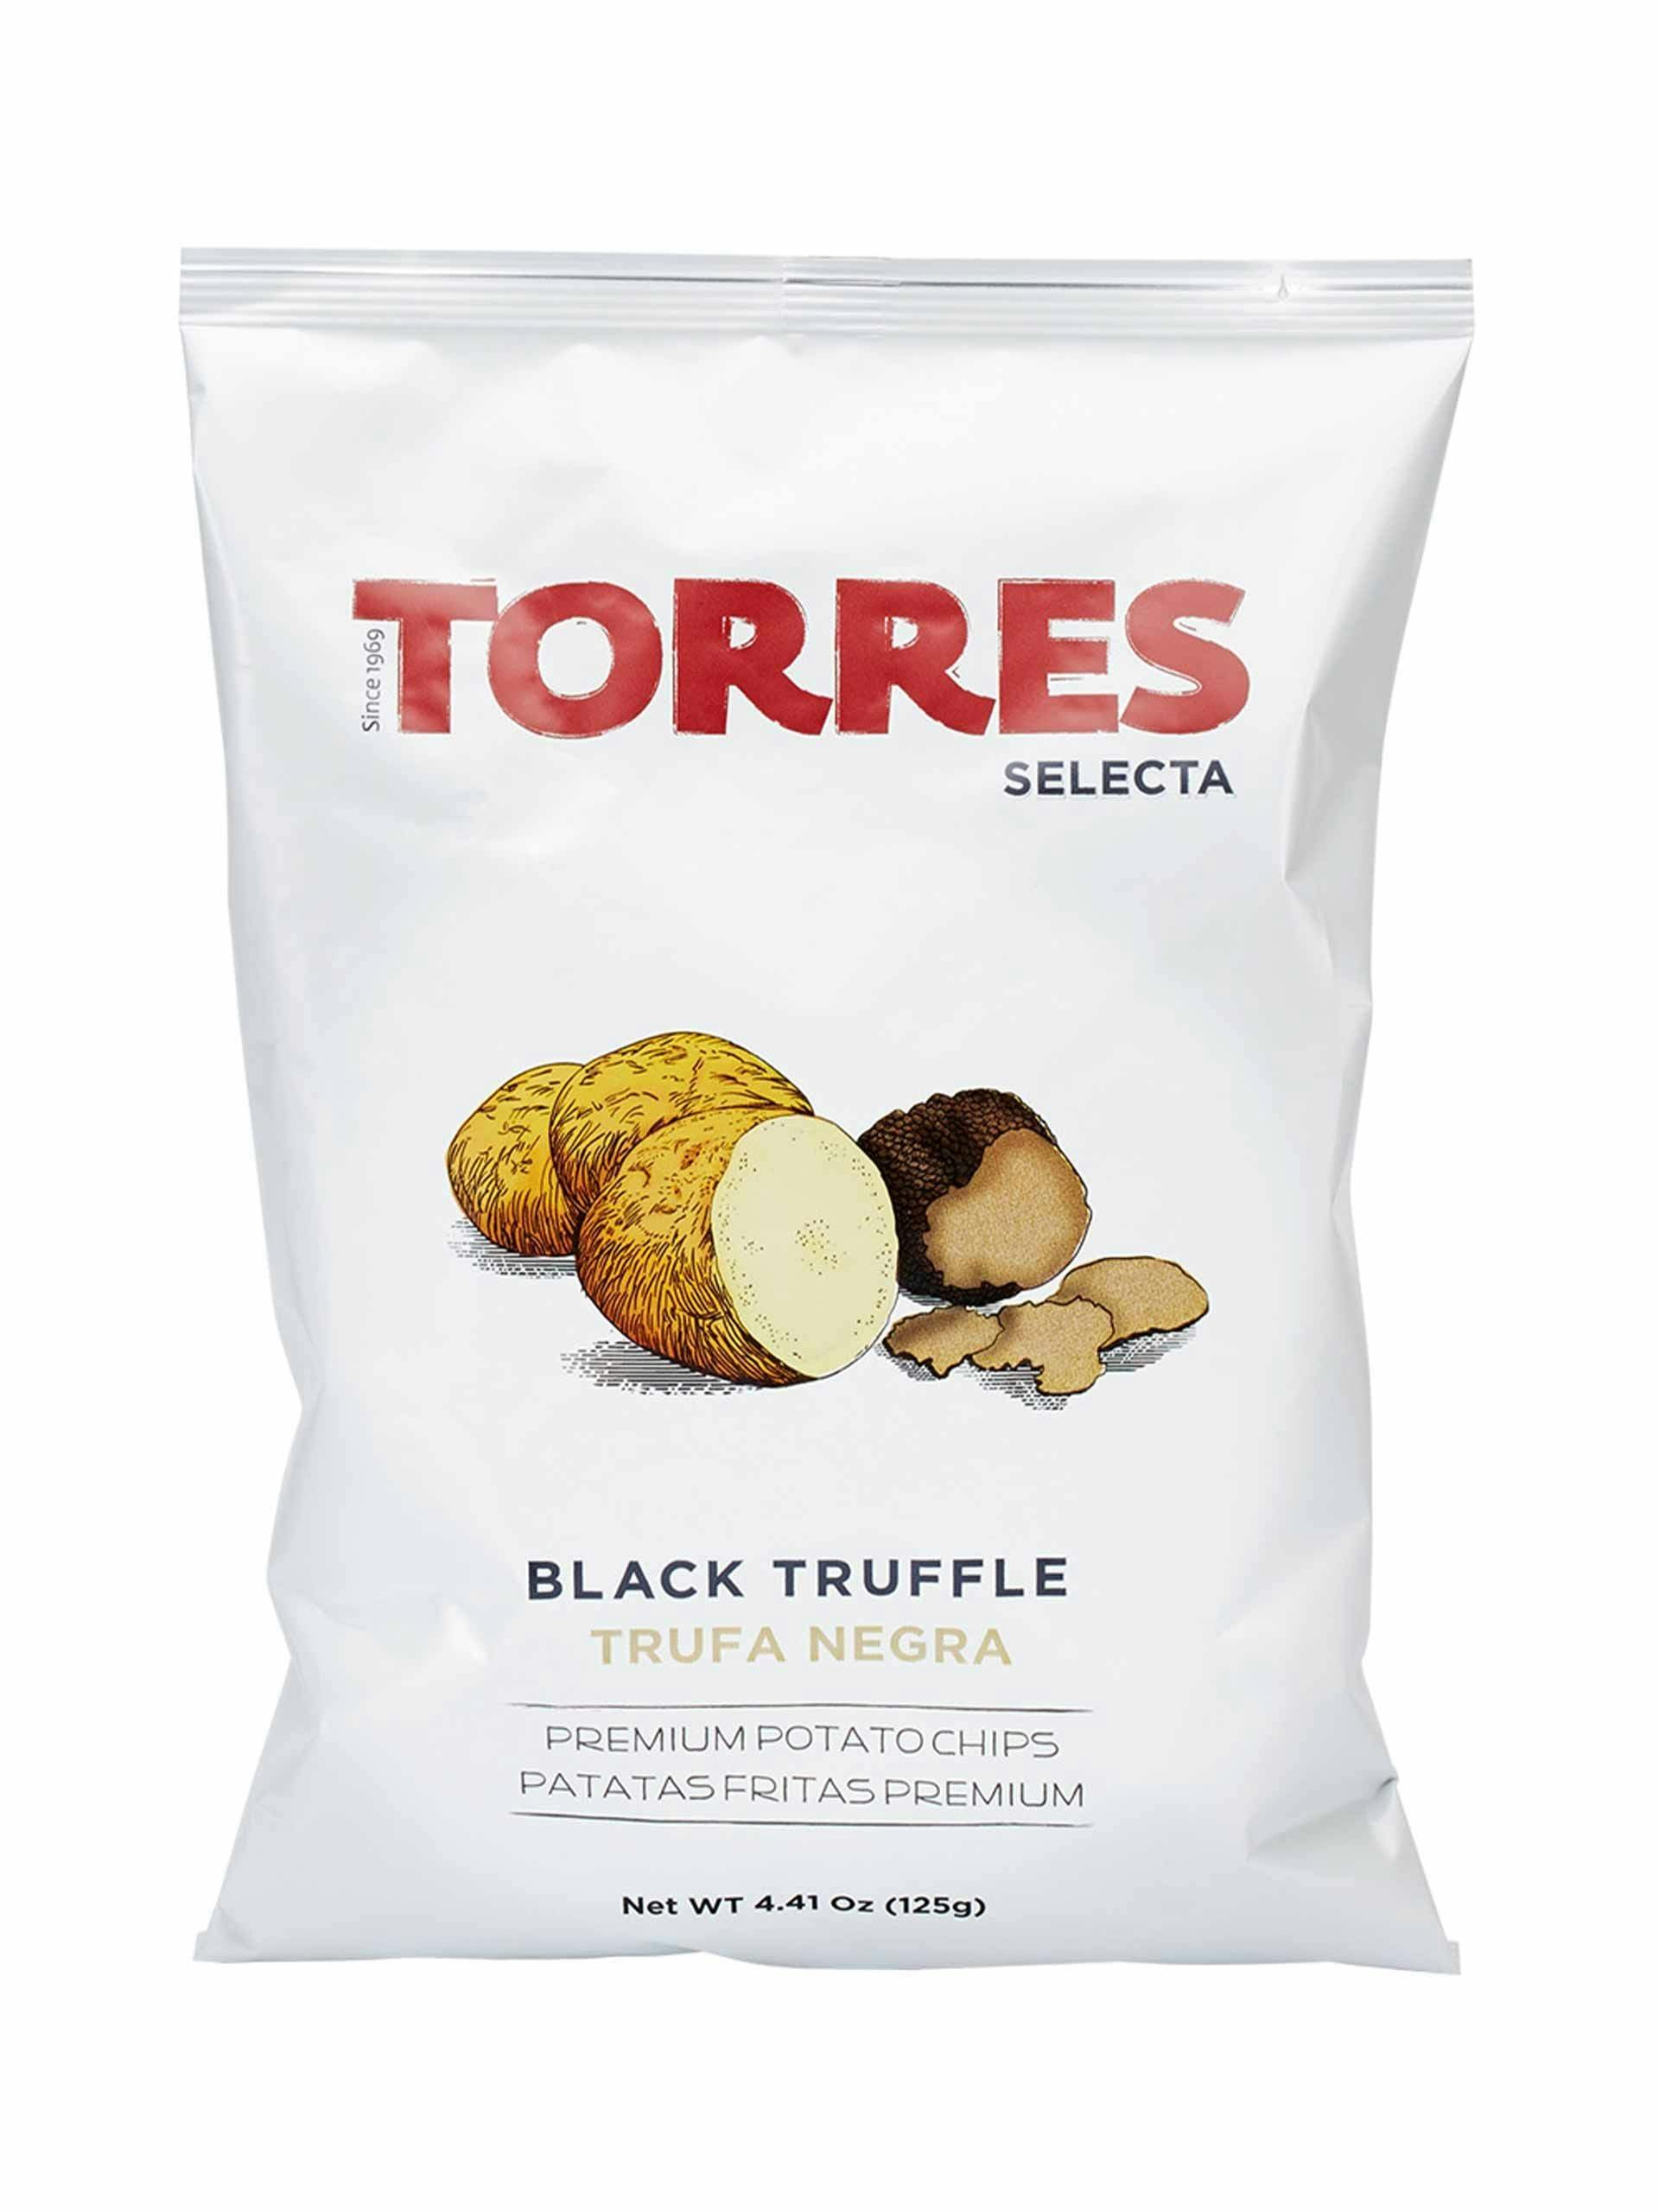 Black truffle crisps